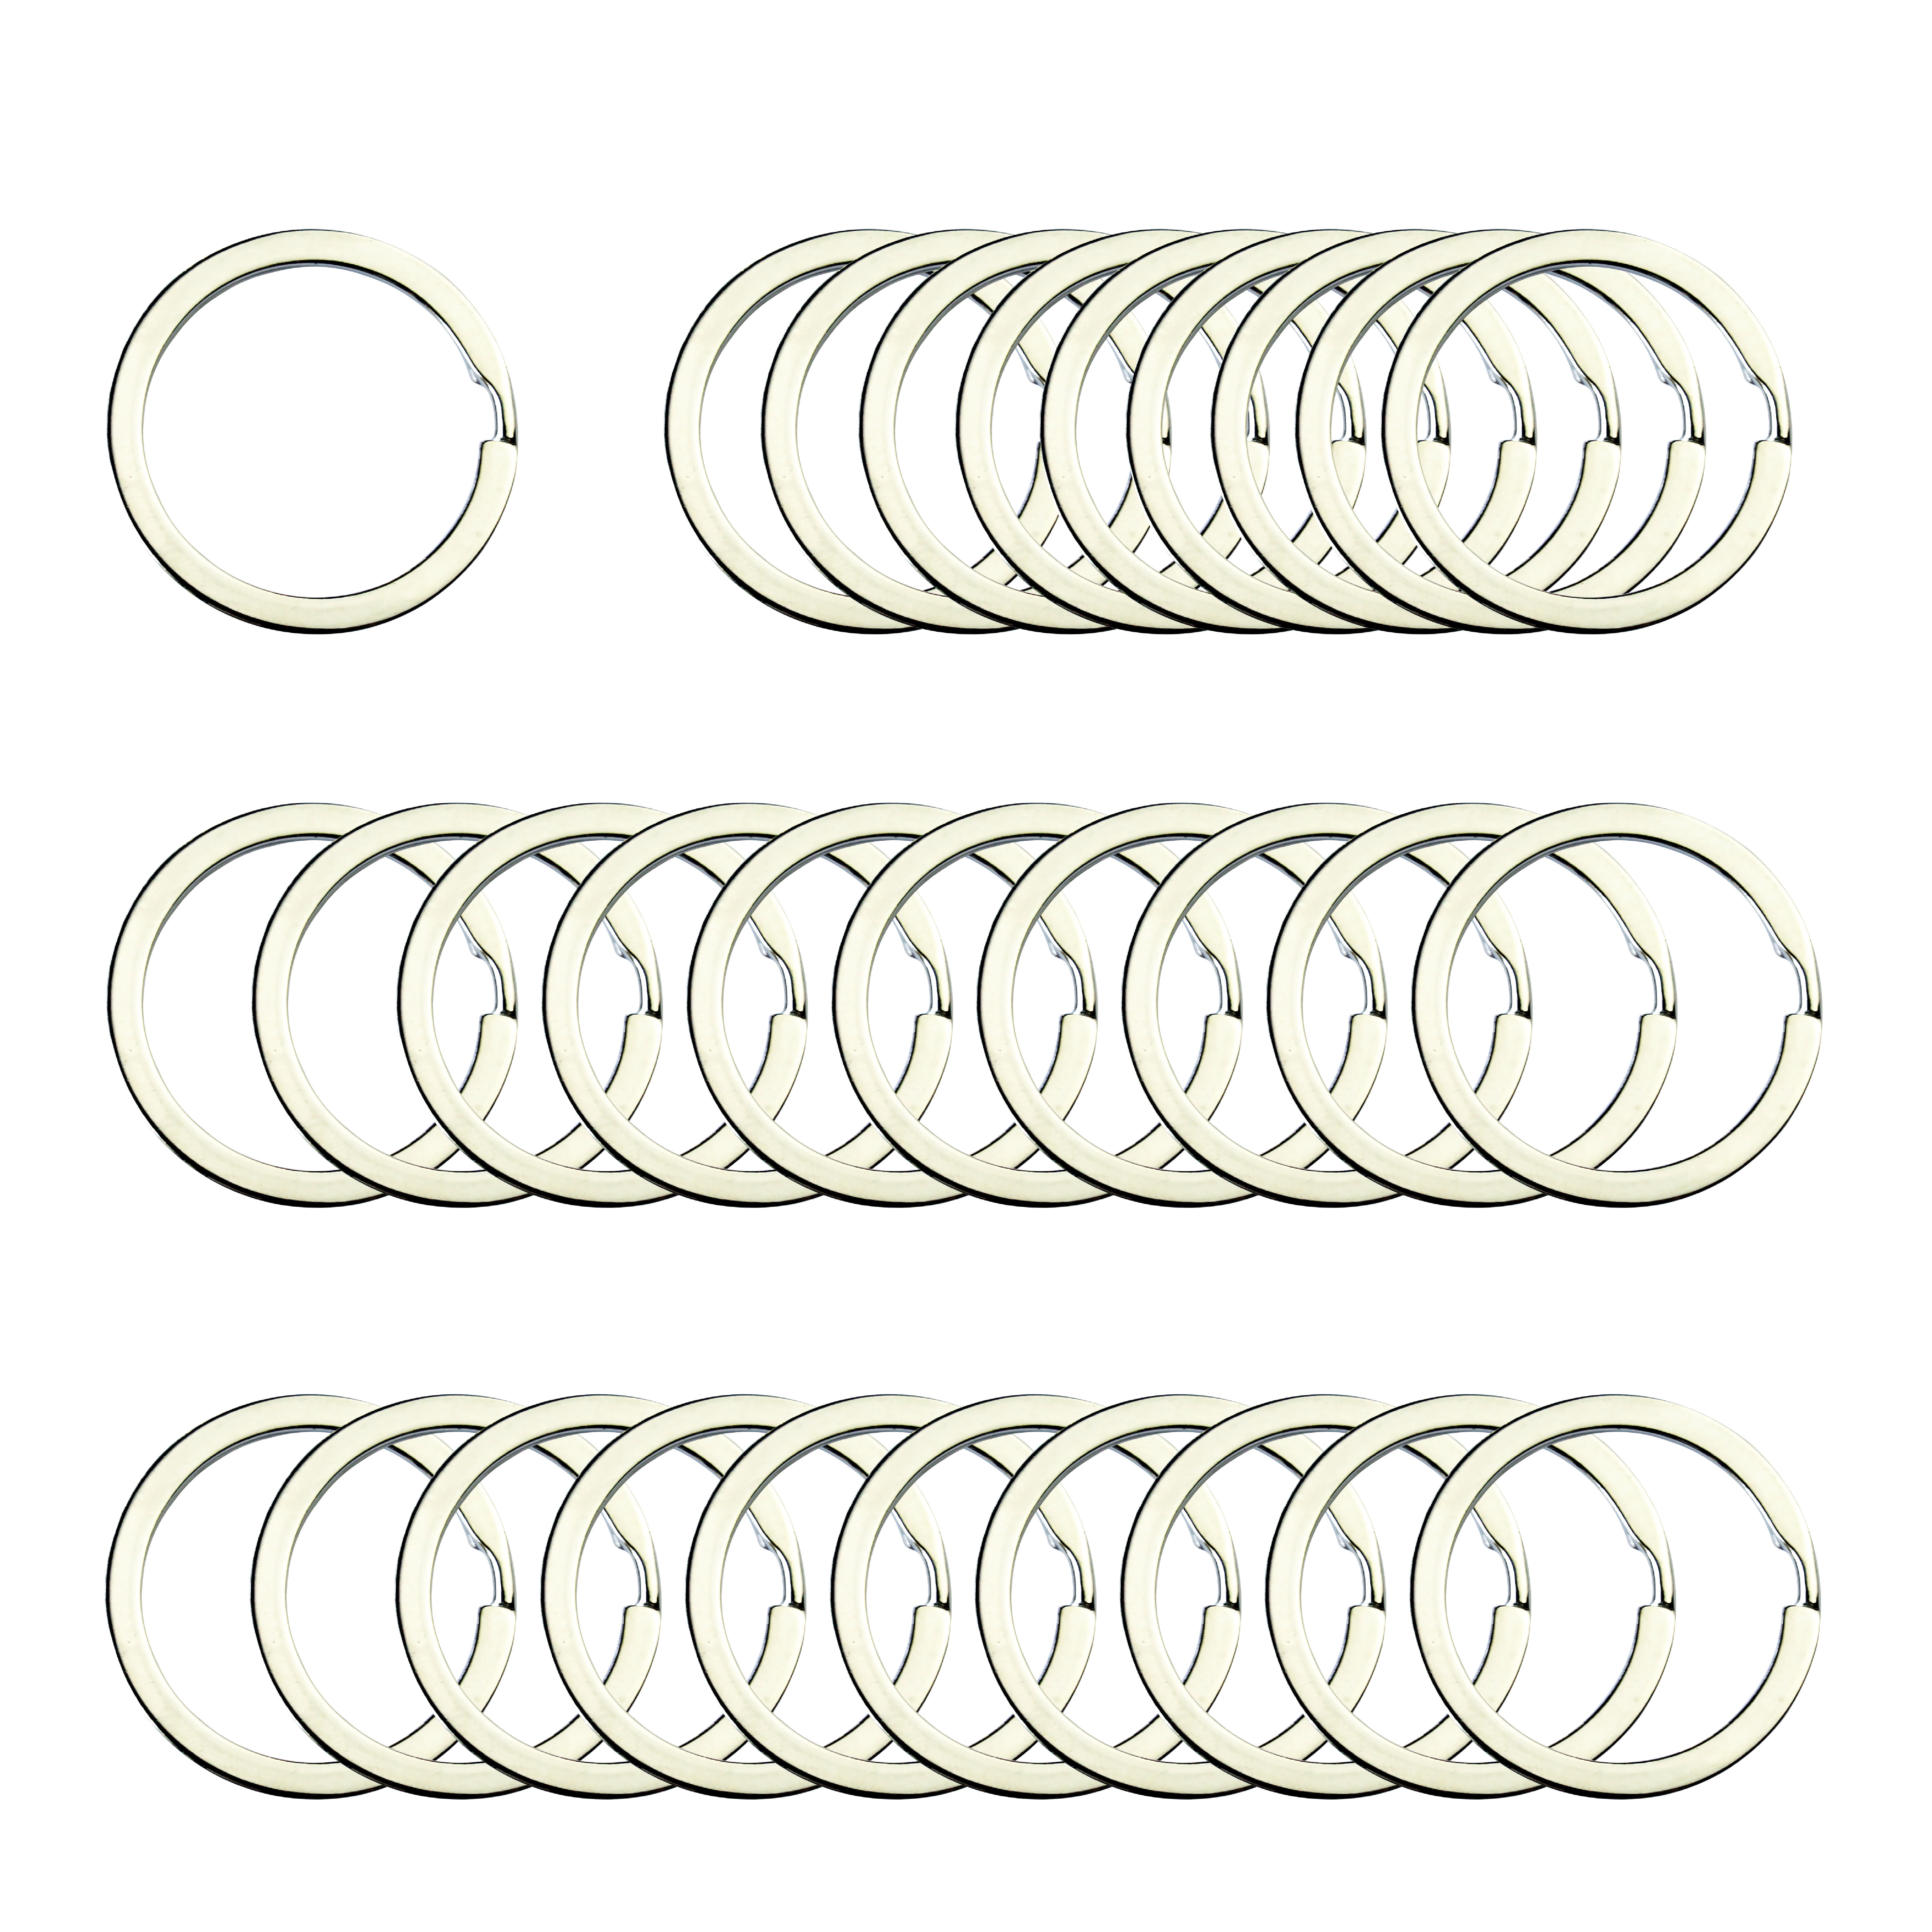 Metal Flat Split Key Chains Rings for Home Car Keys Attachment 1 Inch/25mm,Black,50PCS/Box Key Rings